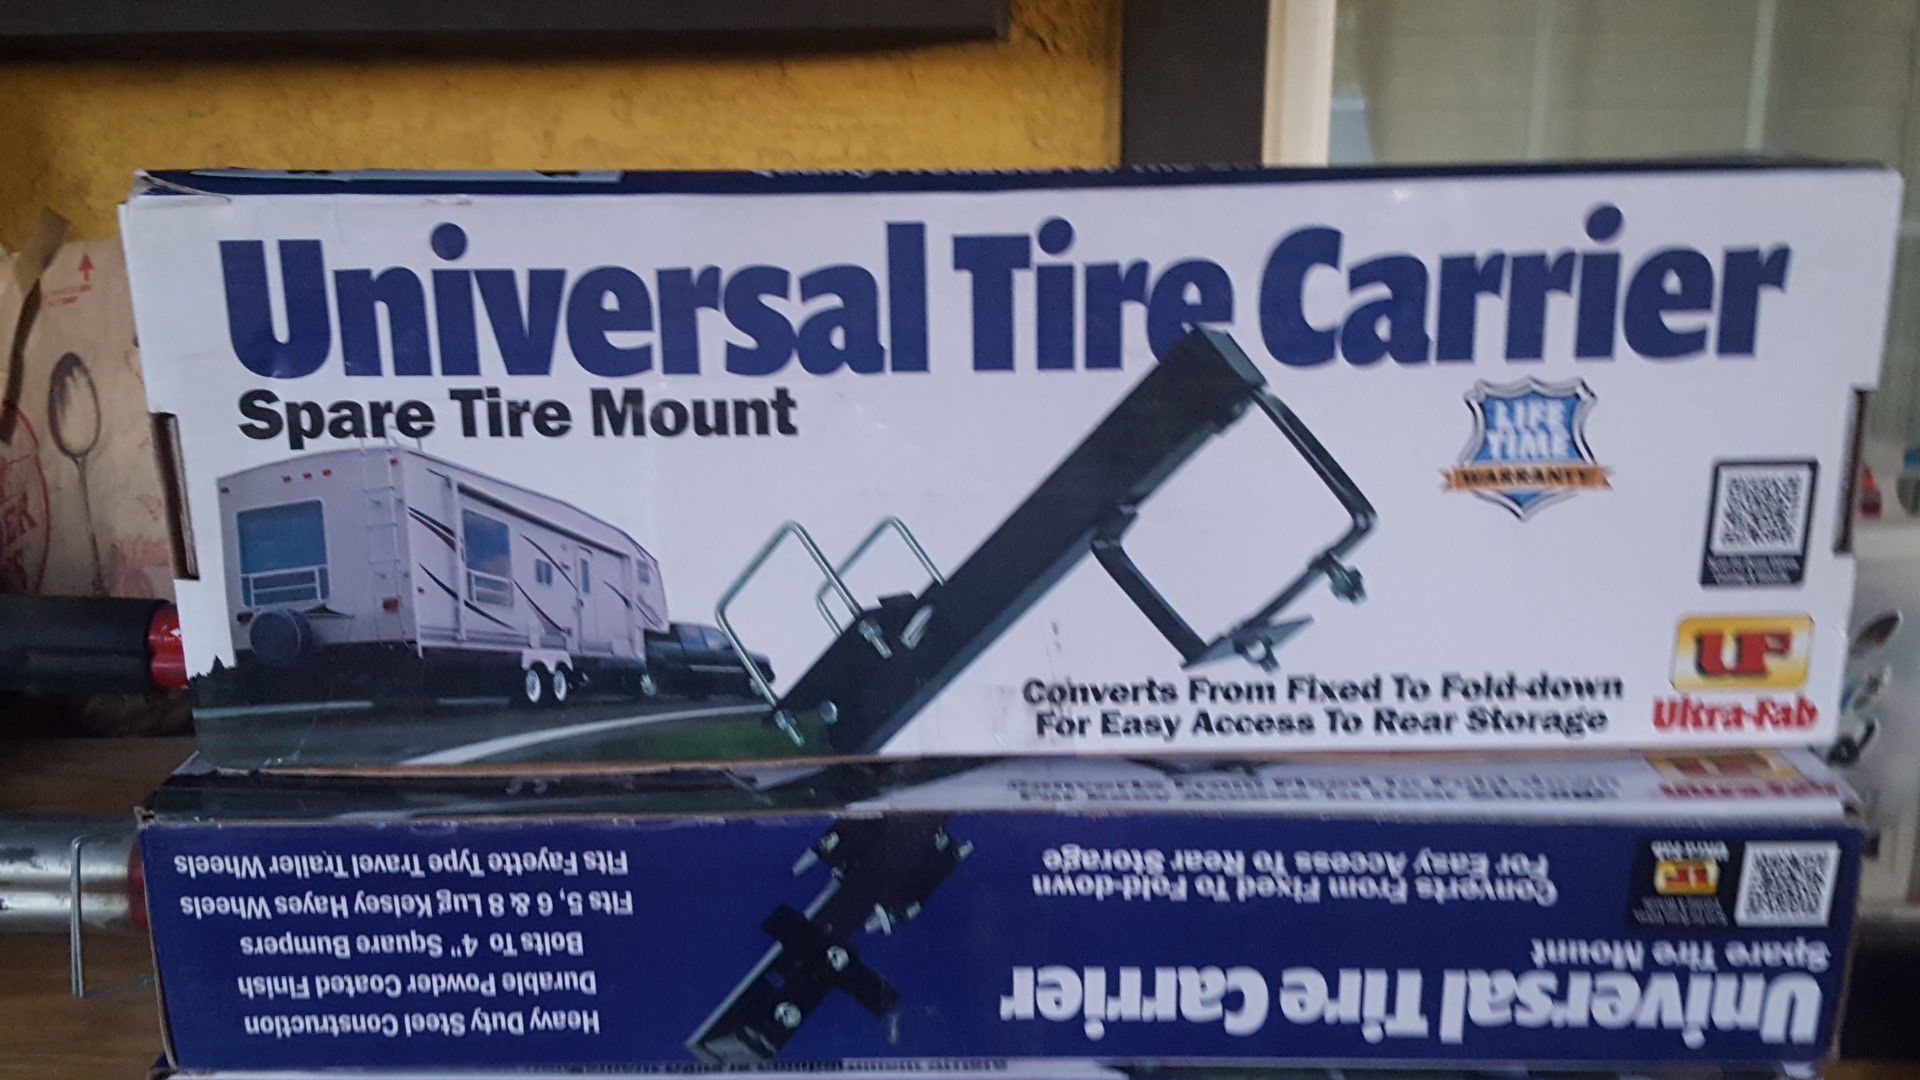 Universal tire carrier